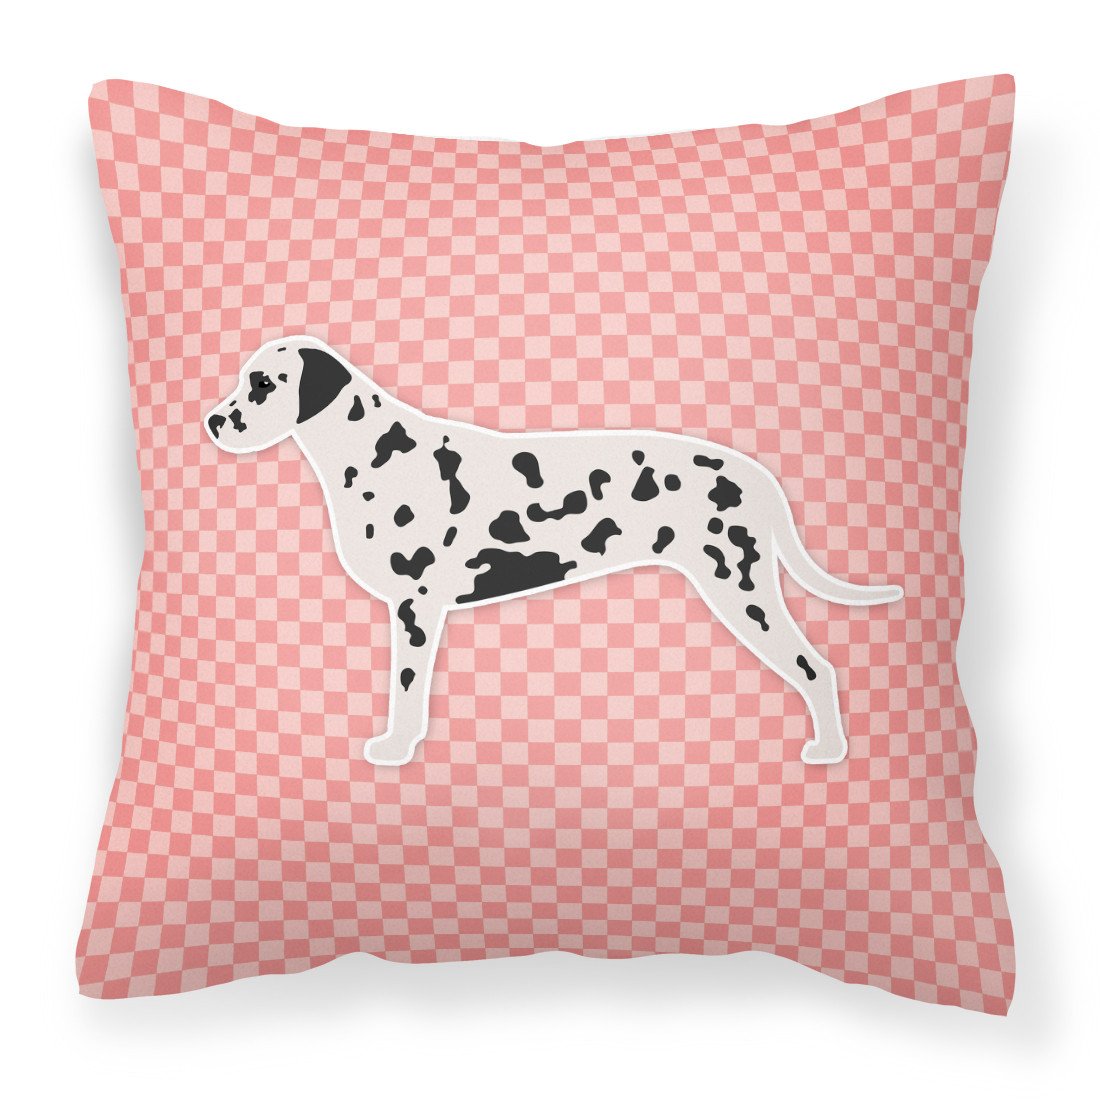 Dalmatian Checkerboard Pink Fabric Decorative Pillow BB3583PW1818 by Caroline's Treasures